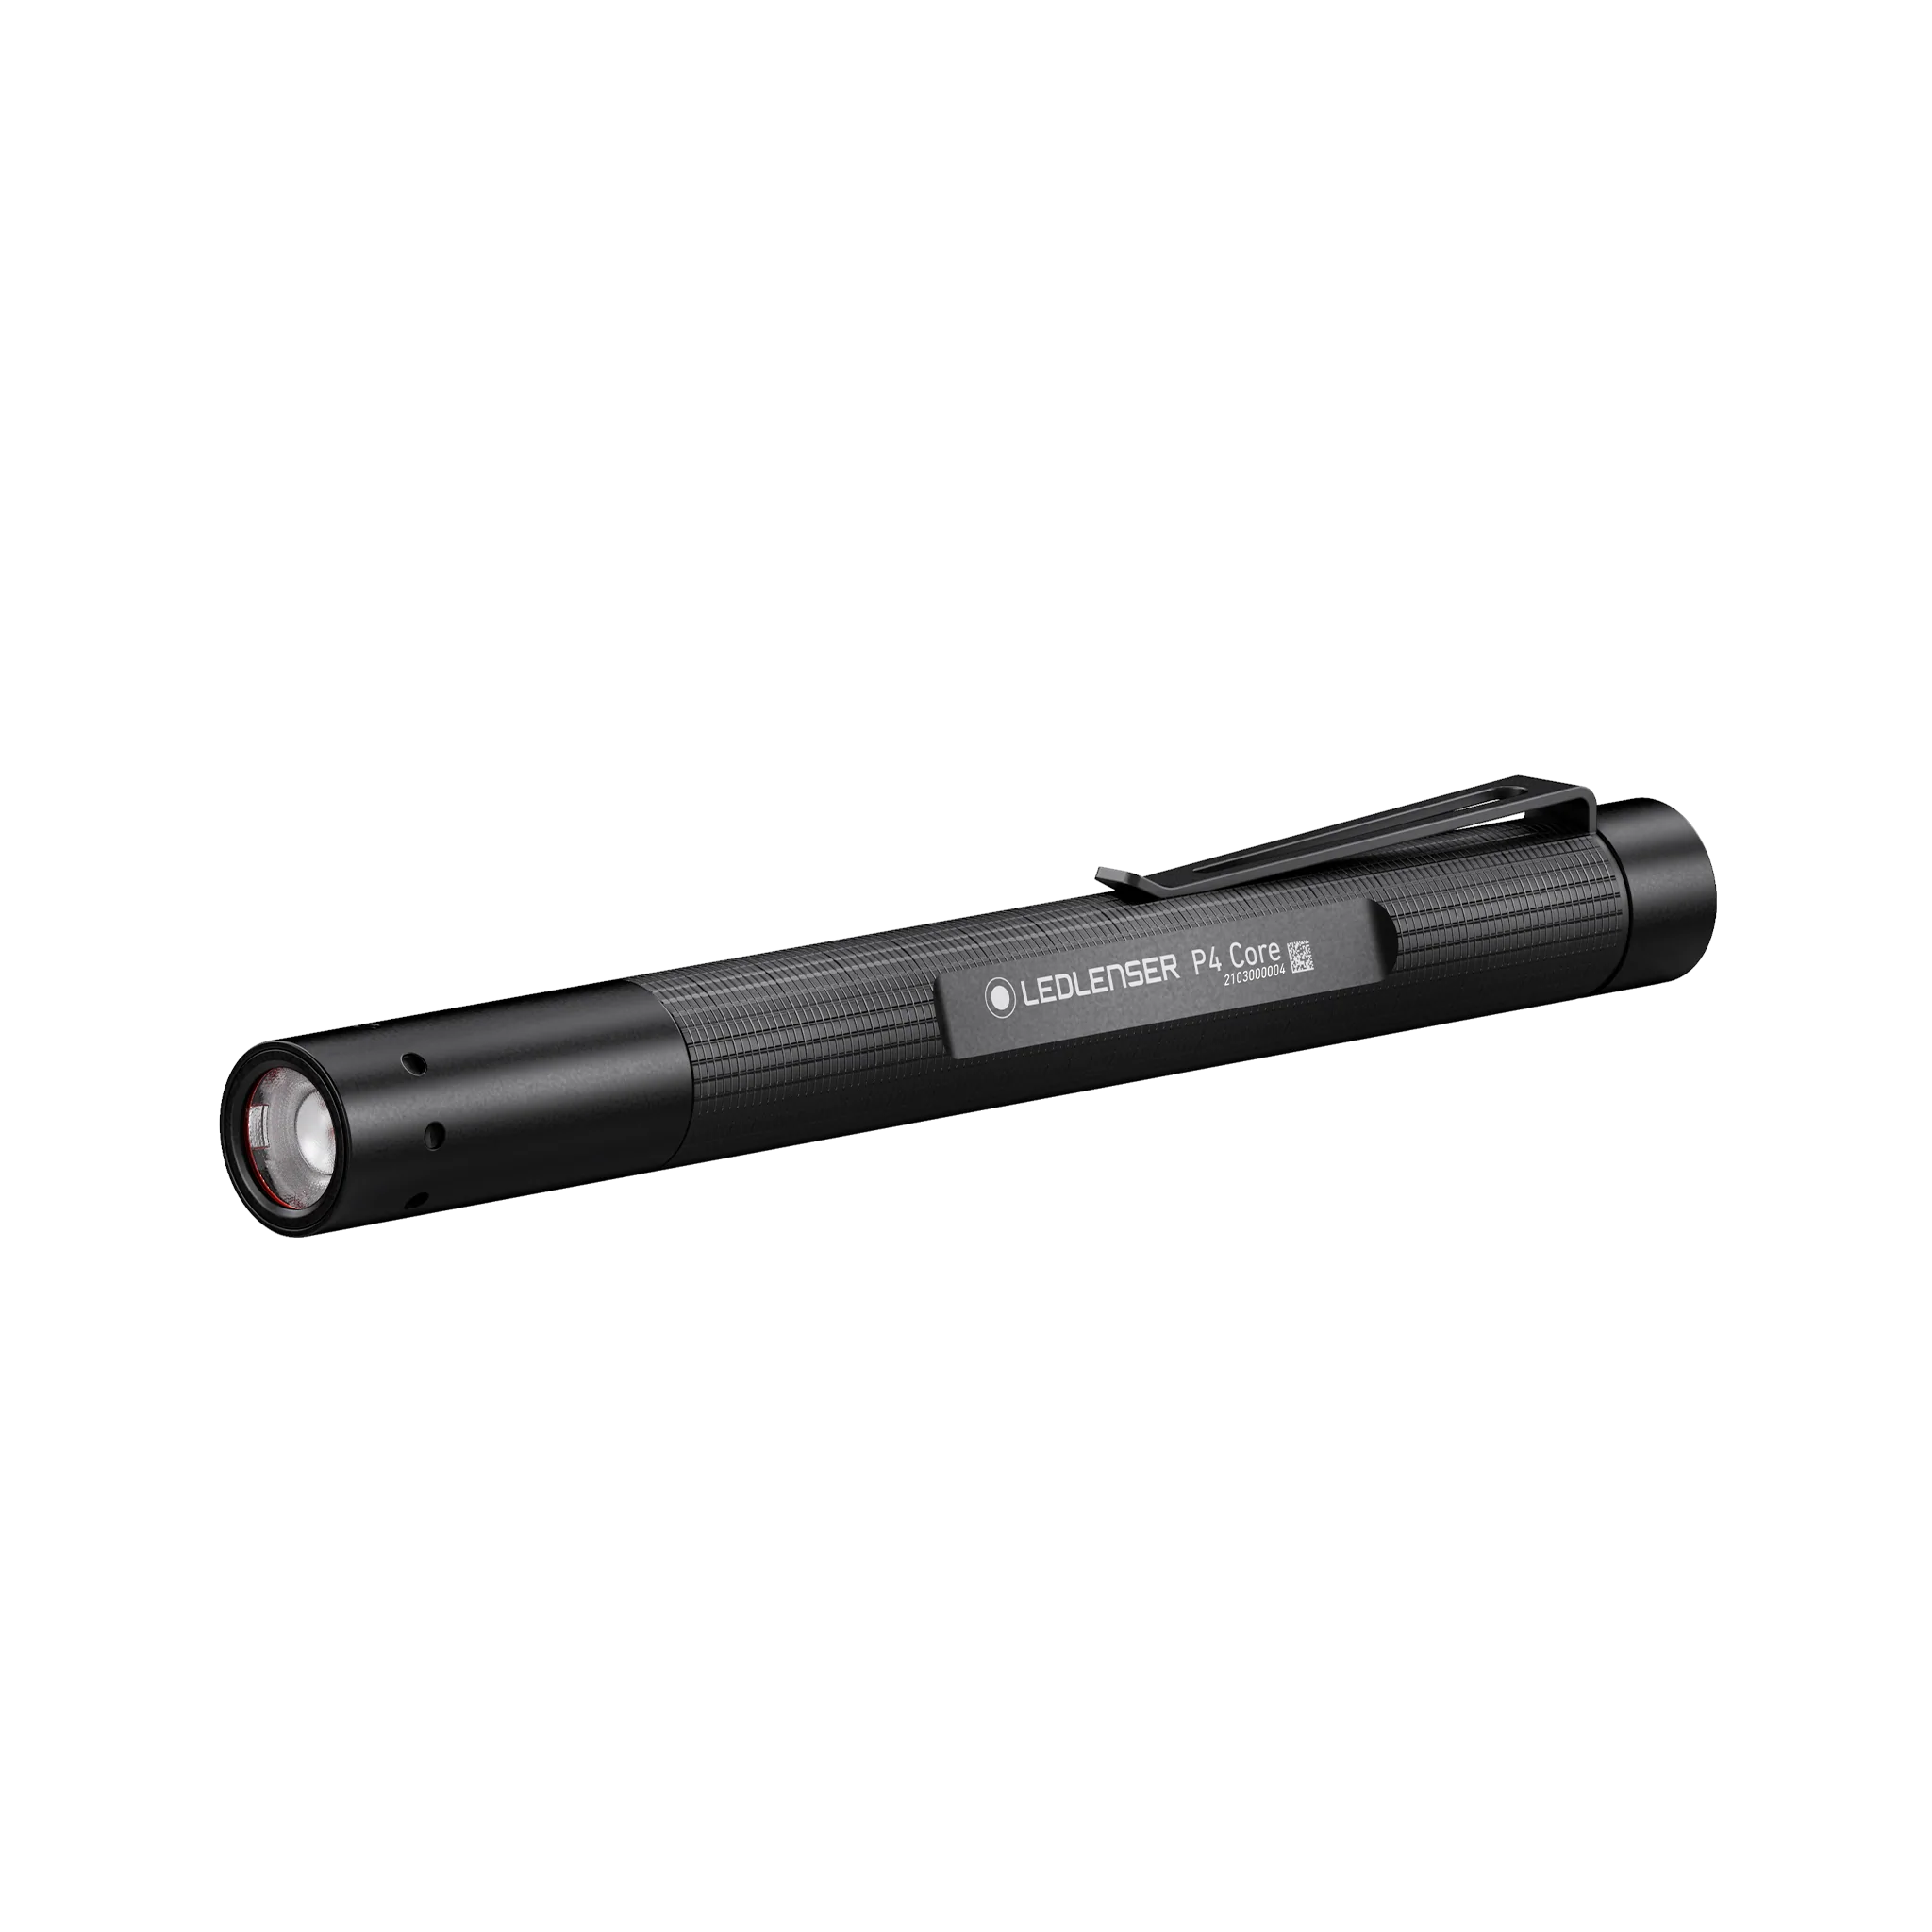 Led Lenser P4 Core Torch - 120 Lumens